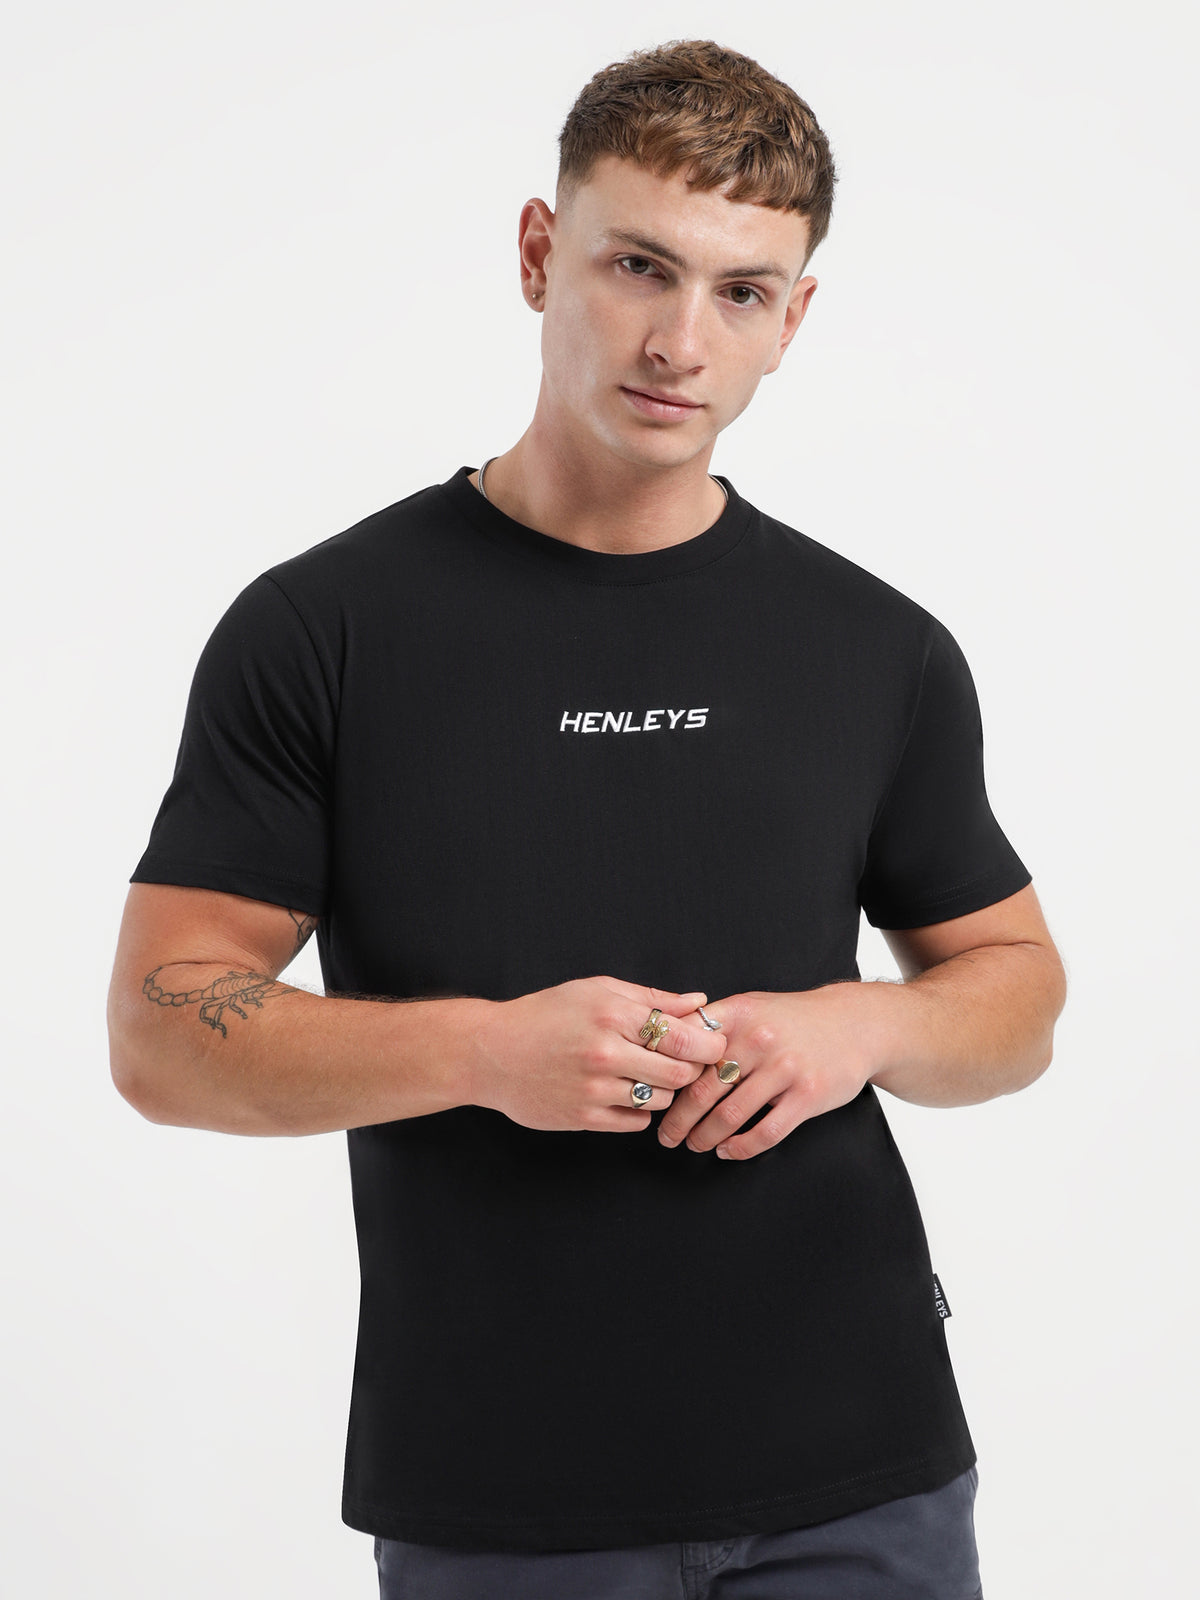 Vicious T-Shirt in Black